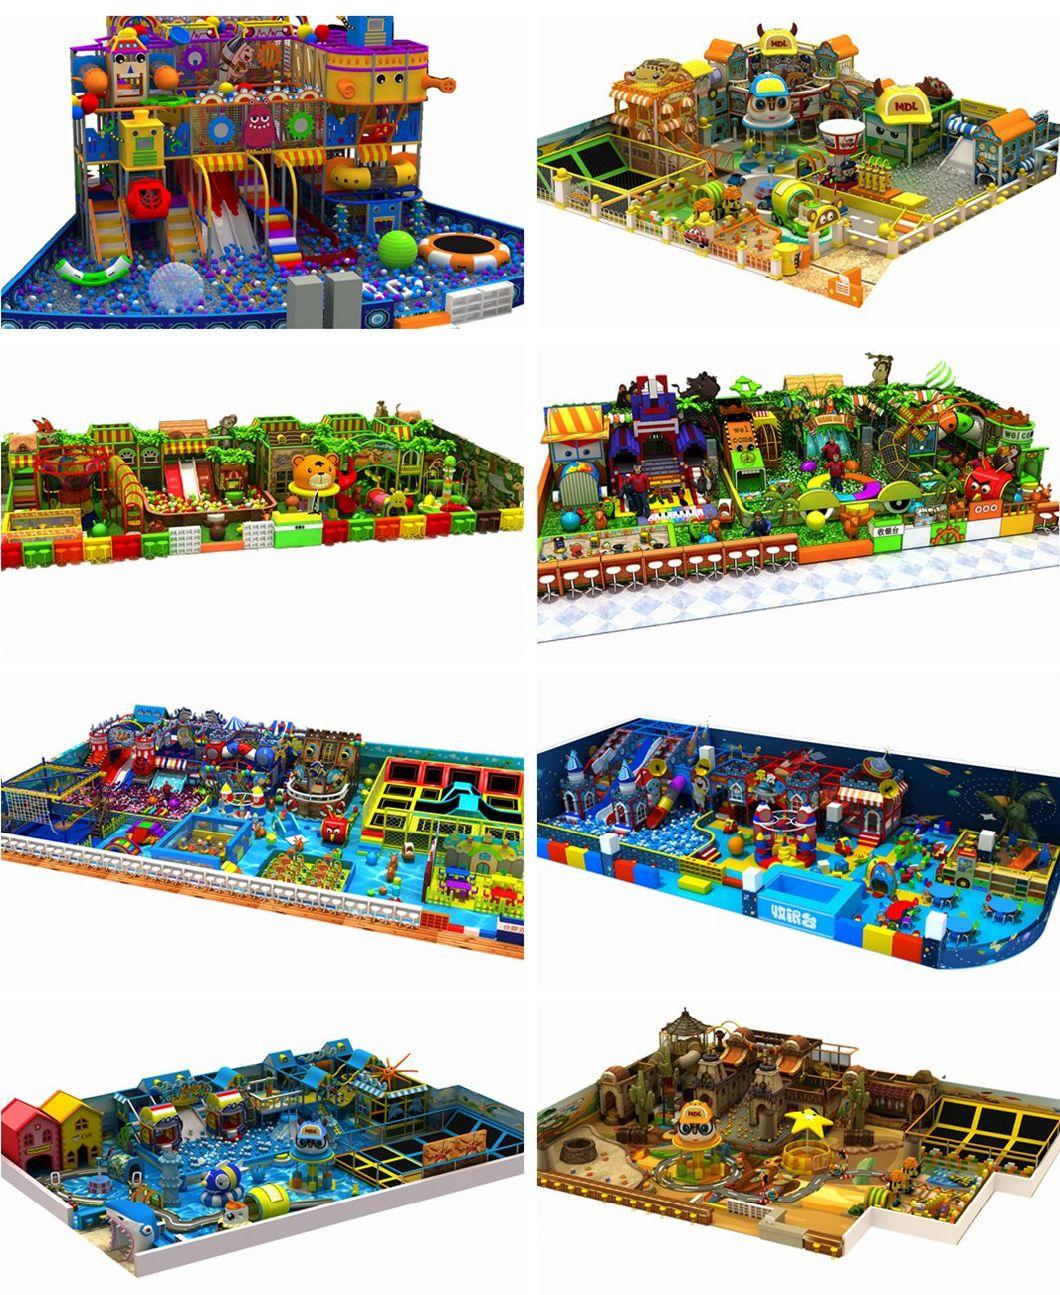 Customized Kids Indoor Children′s Playground Equipment Mall Commercial Amusement Park